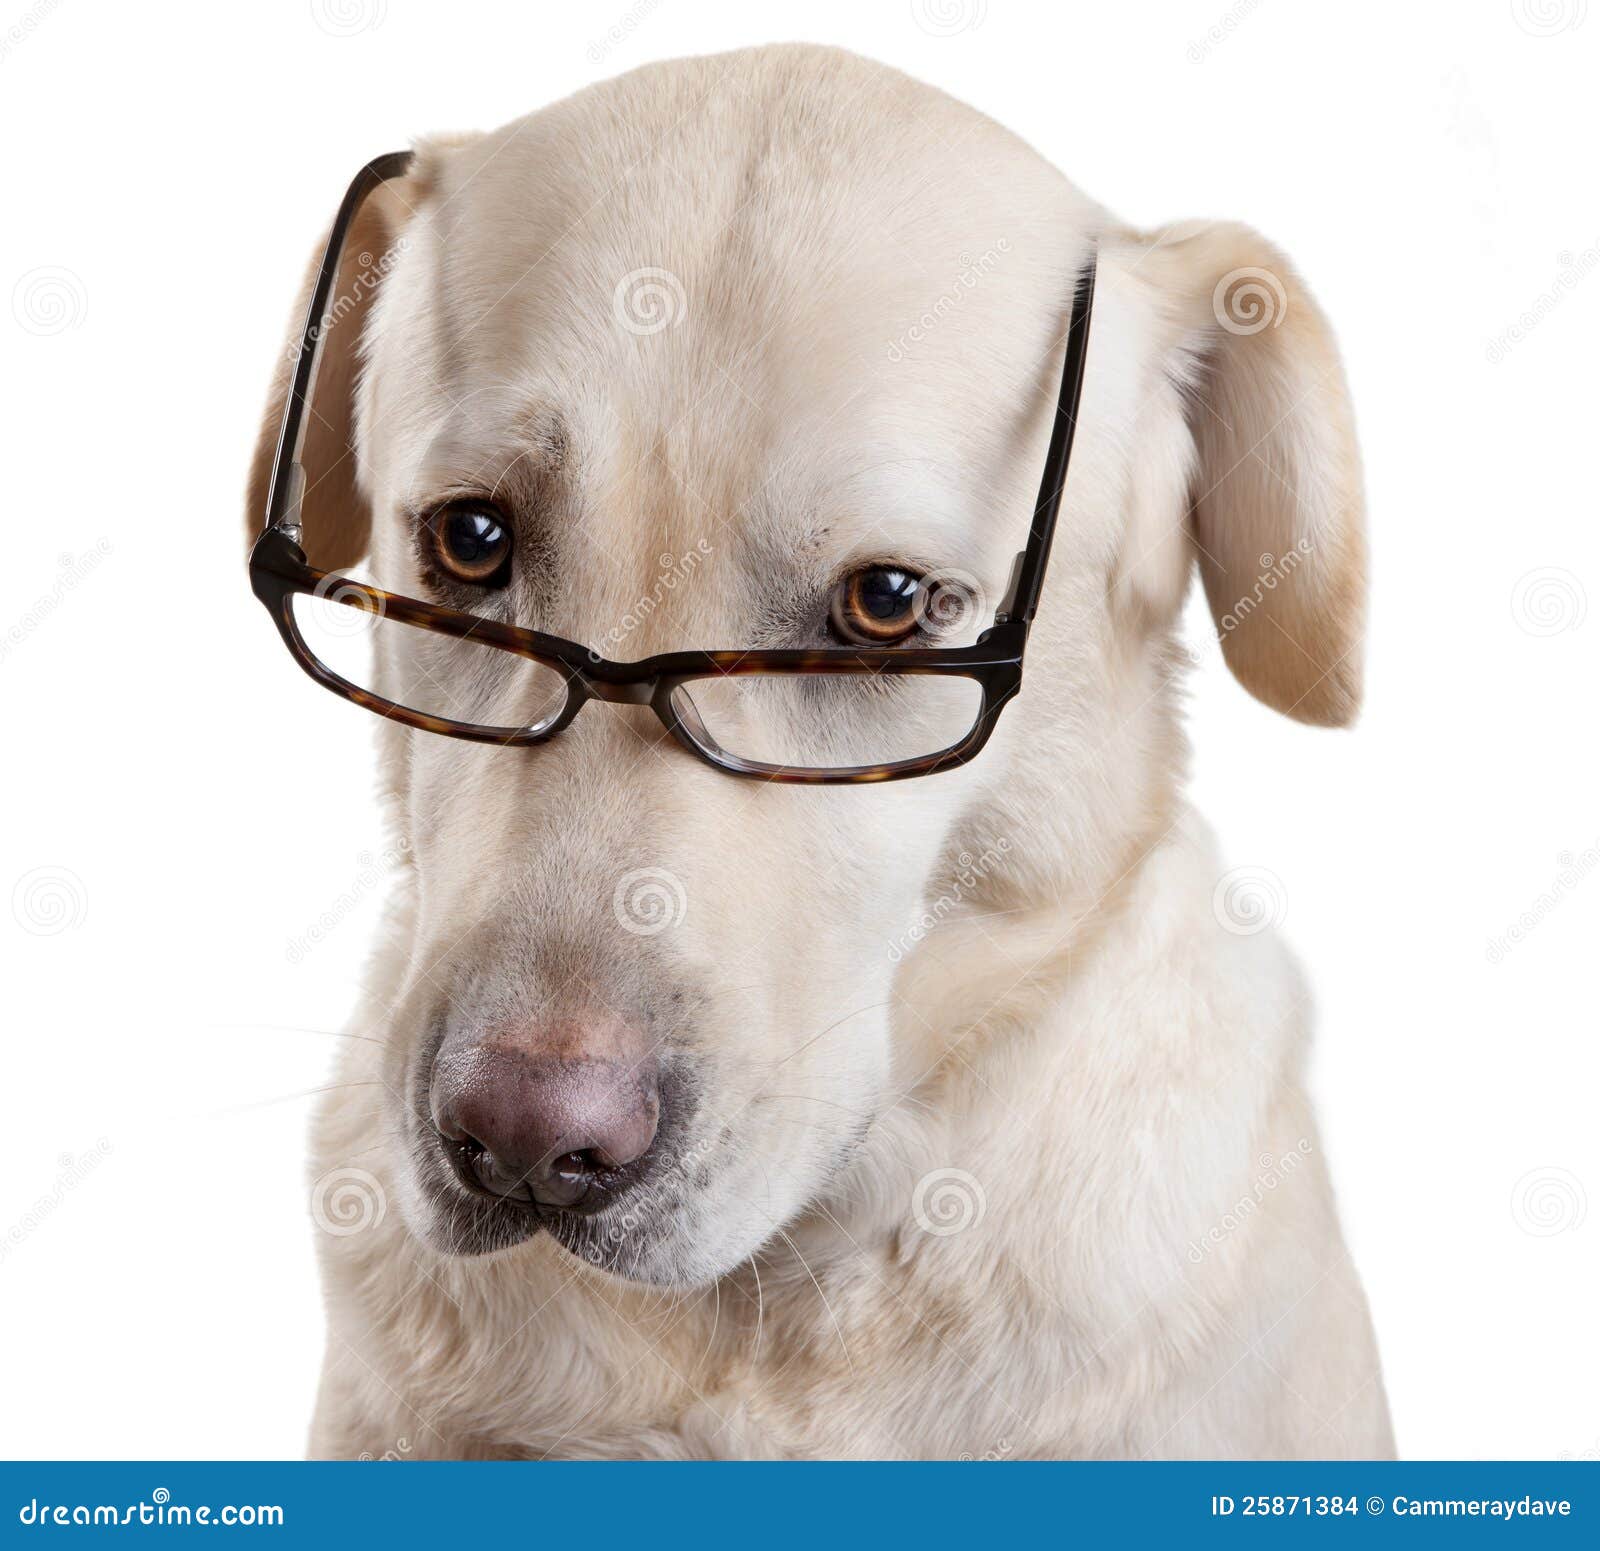 reading glasses funny dog